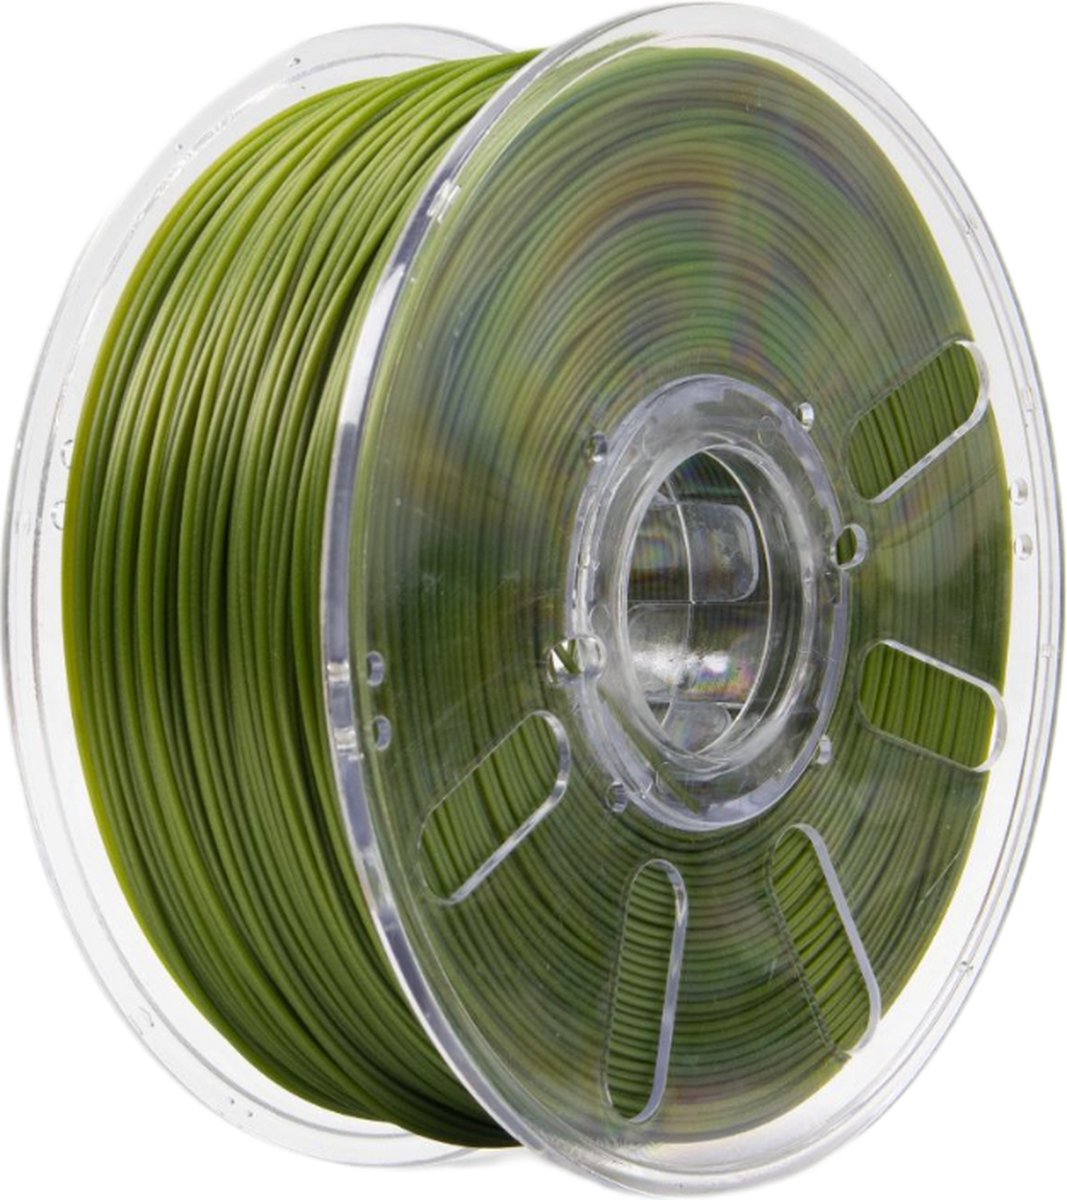 Microzey Pla Pro kaki Groen / Khaki Green 1.75 mm 1 kg